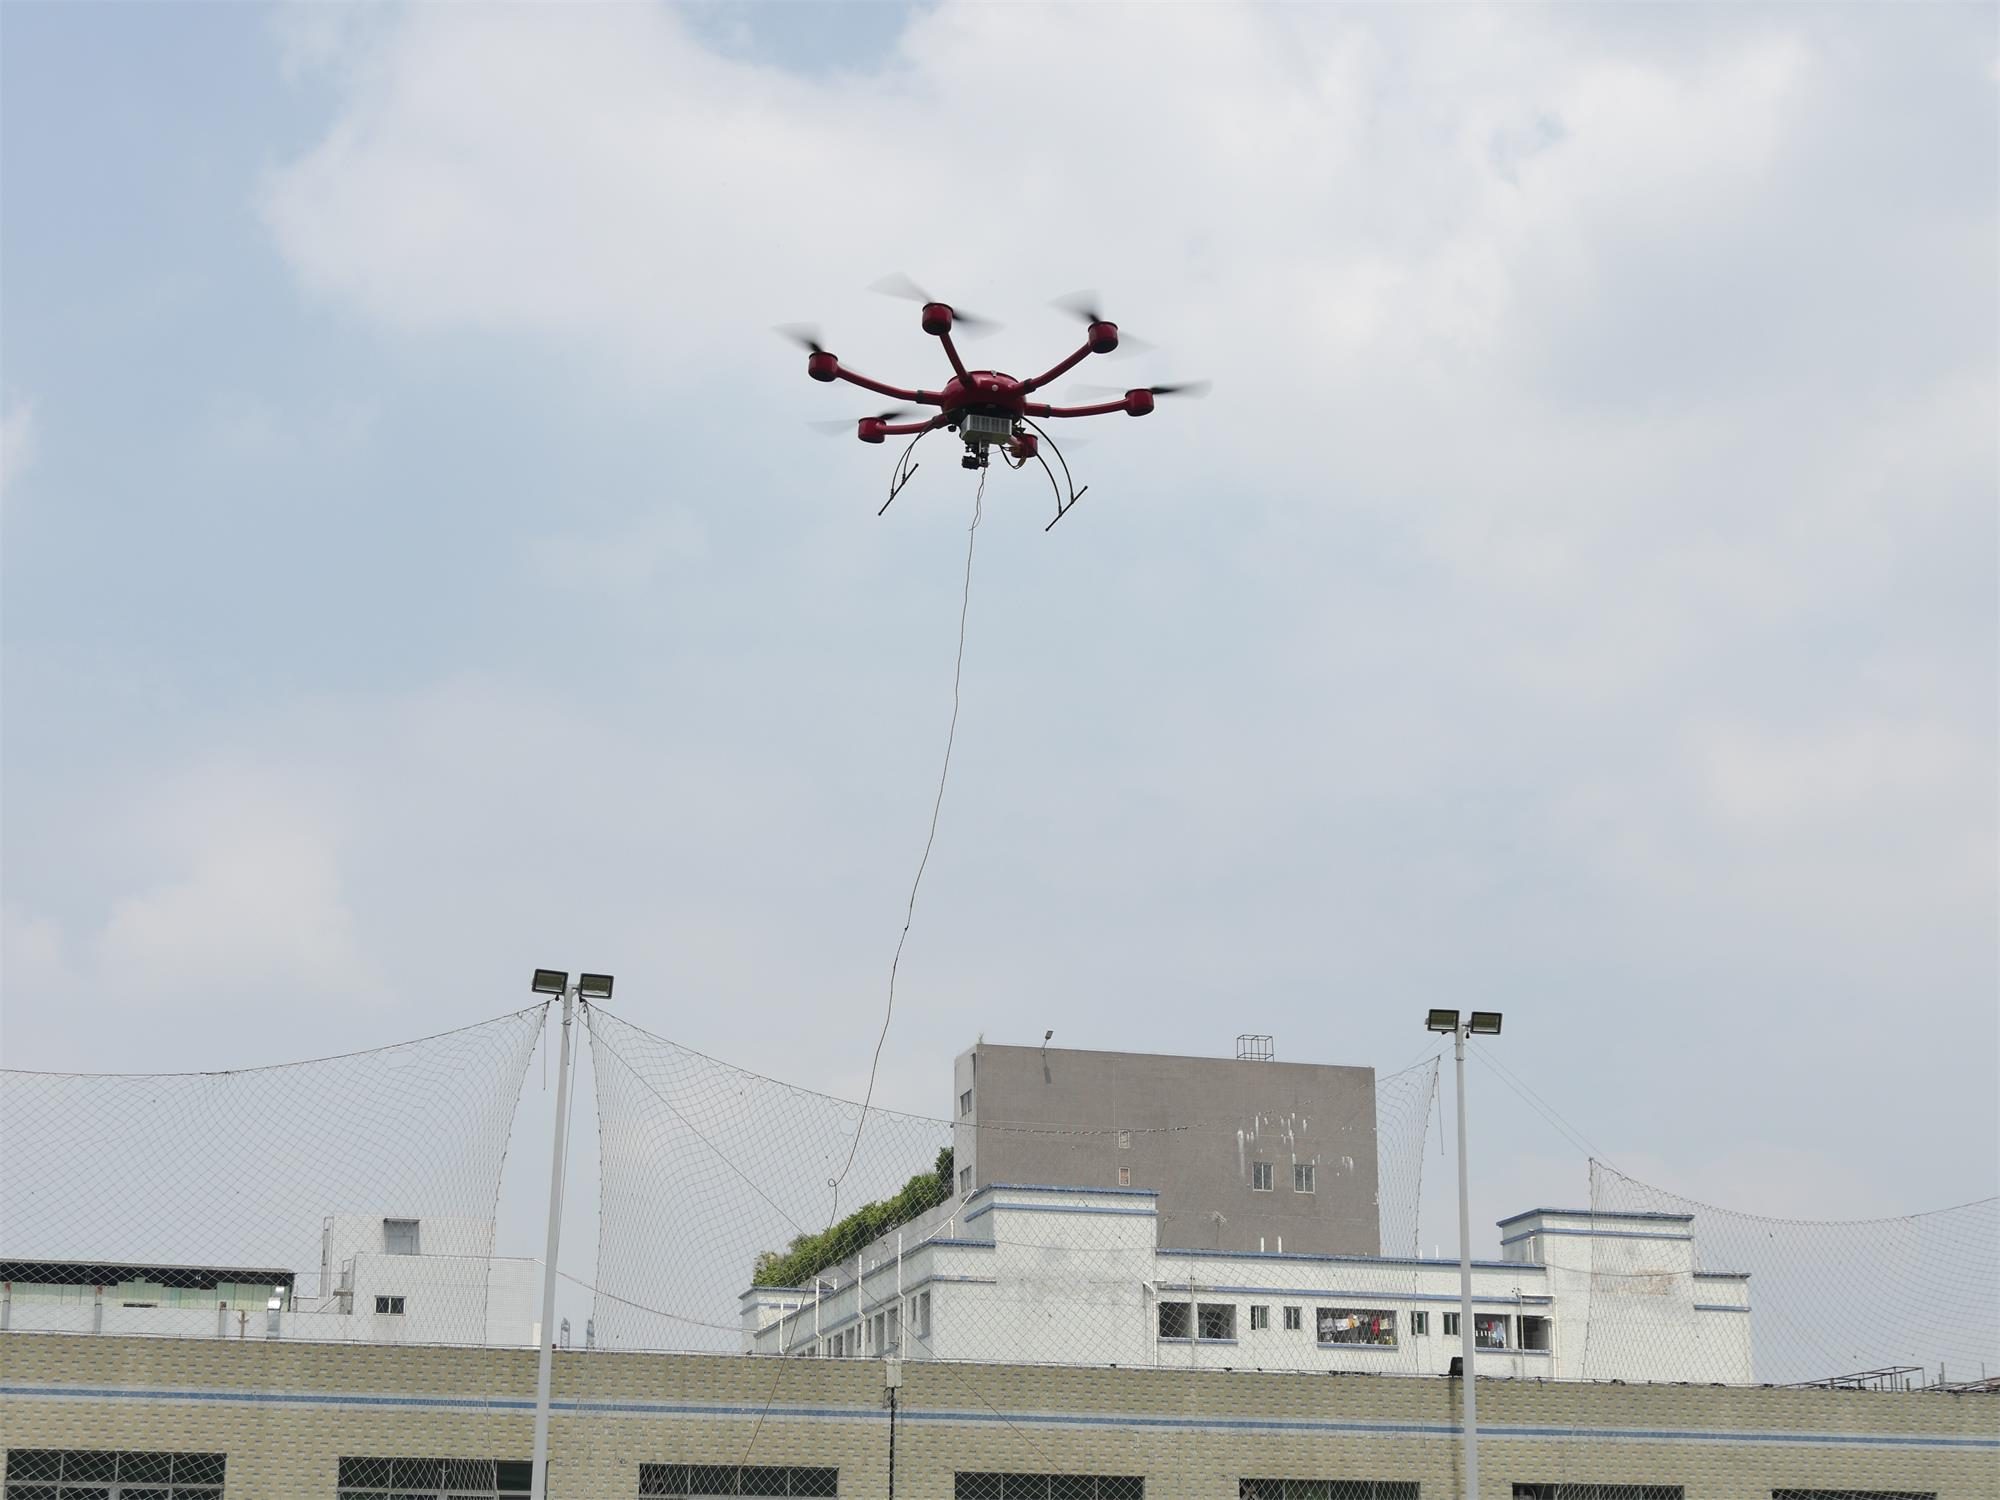 MMC UAV - Leading Industrial Drone Solutions Provider